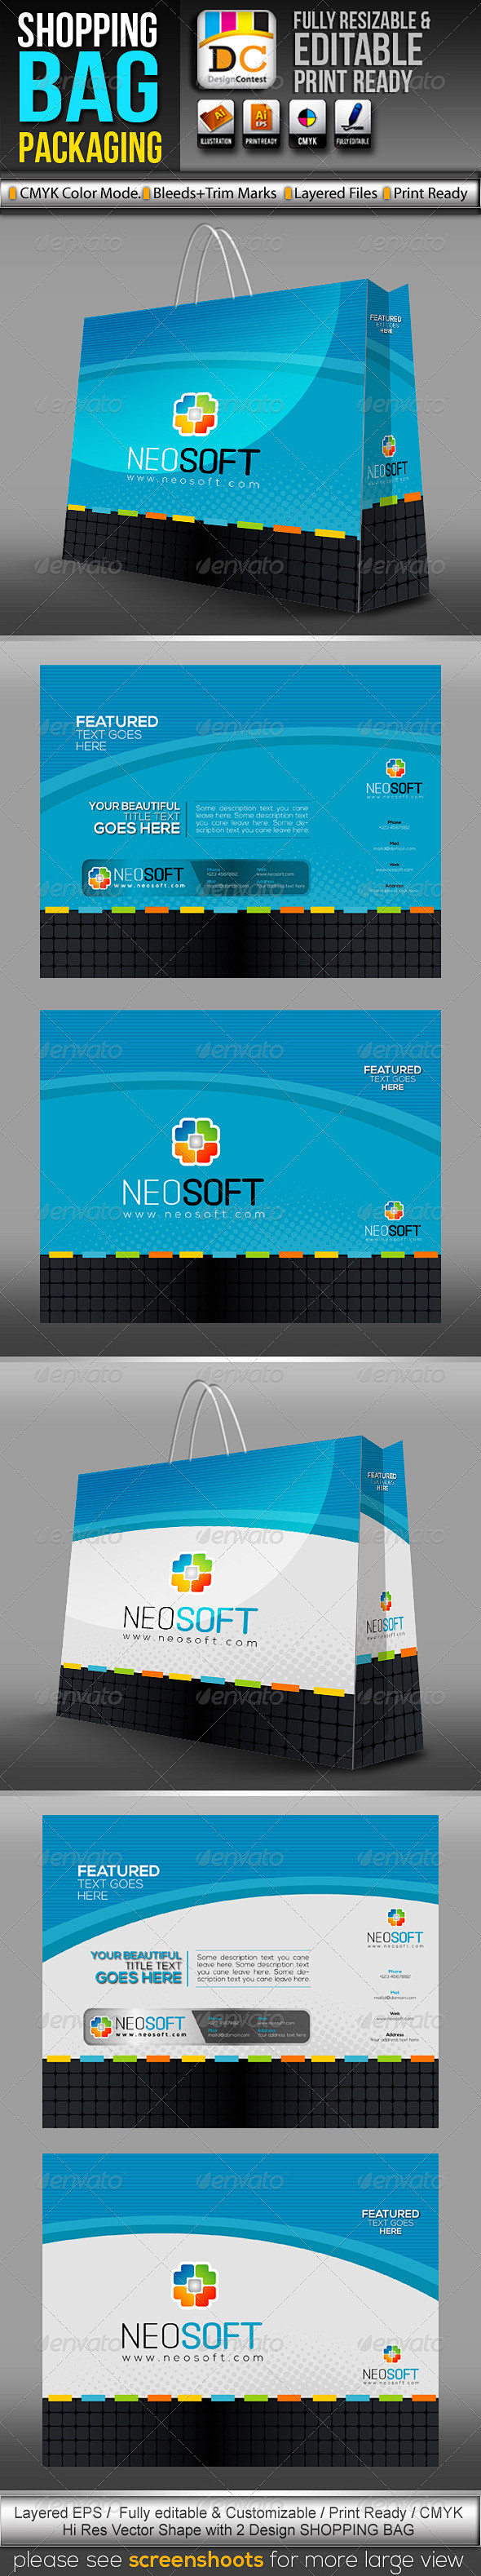 NeoSoft_Shopping Bag...